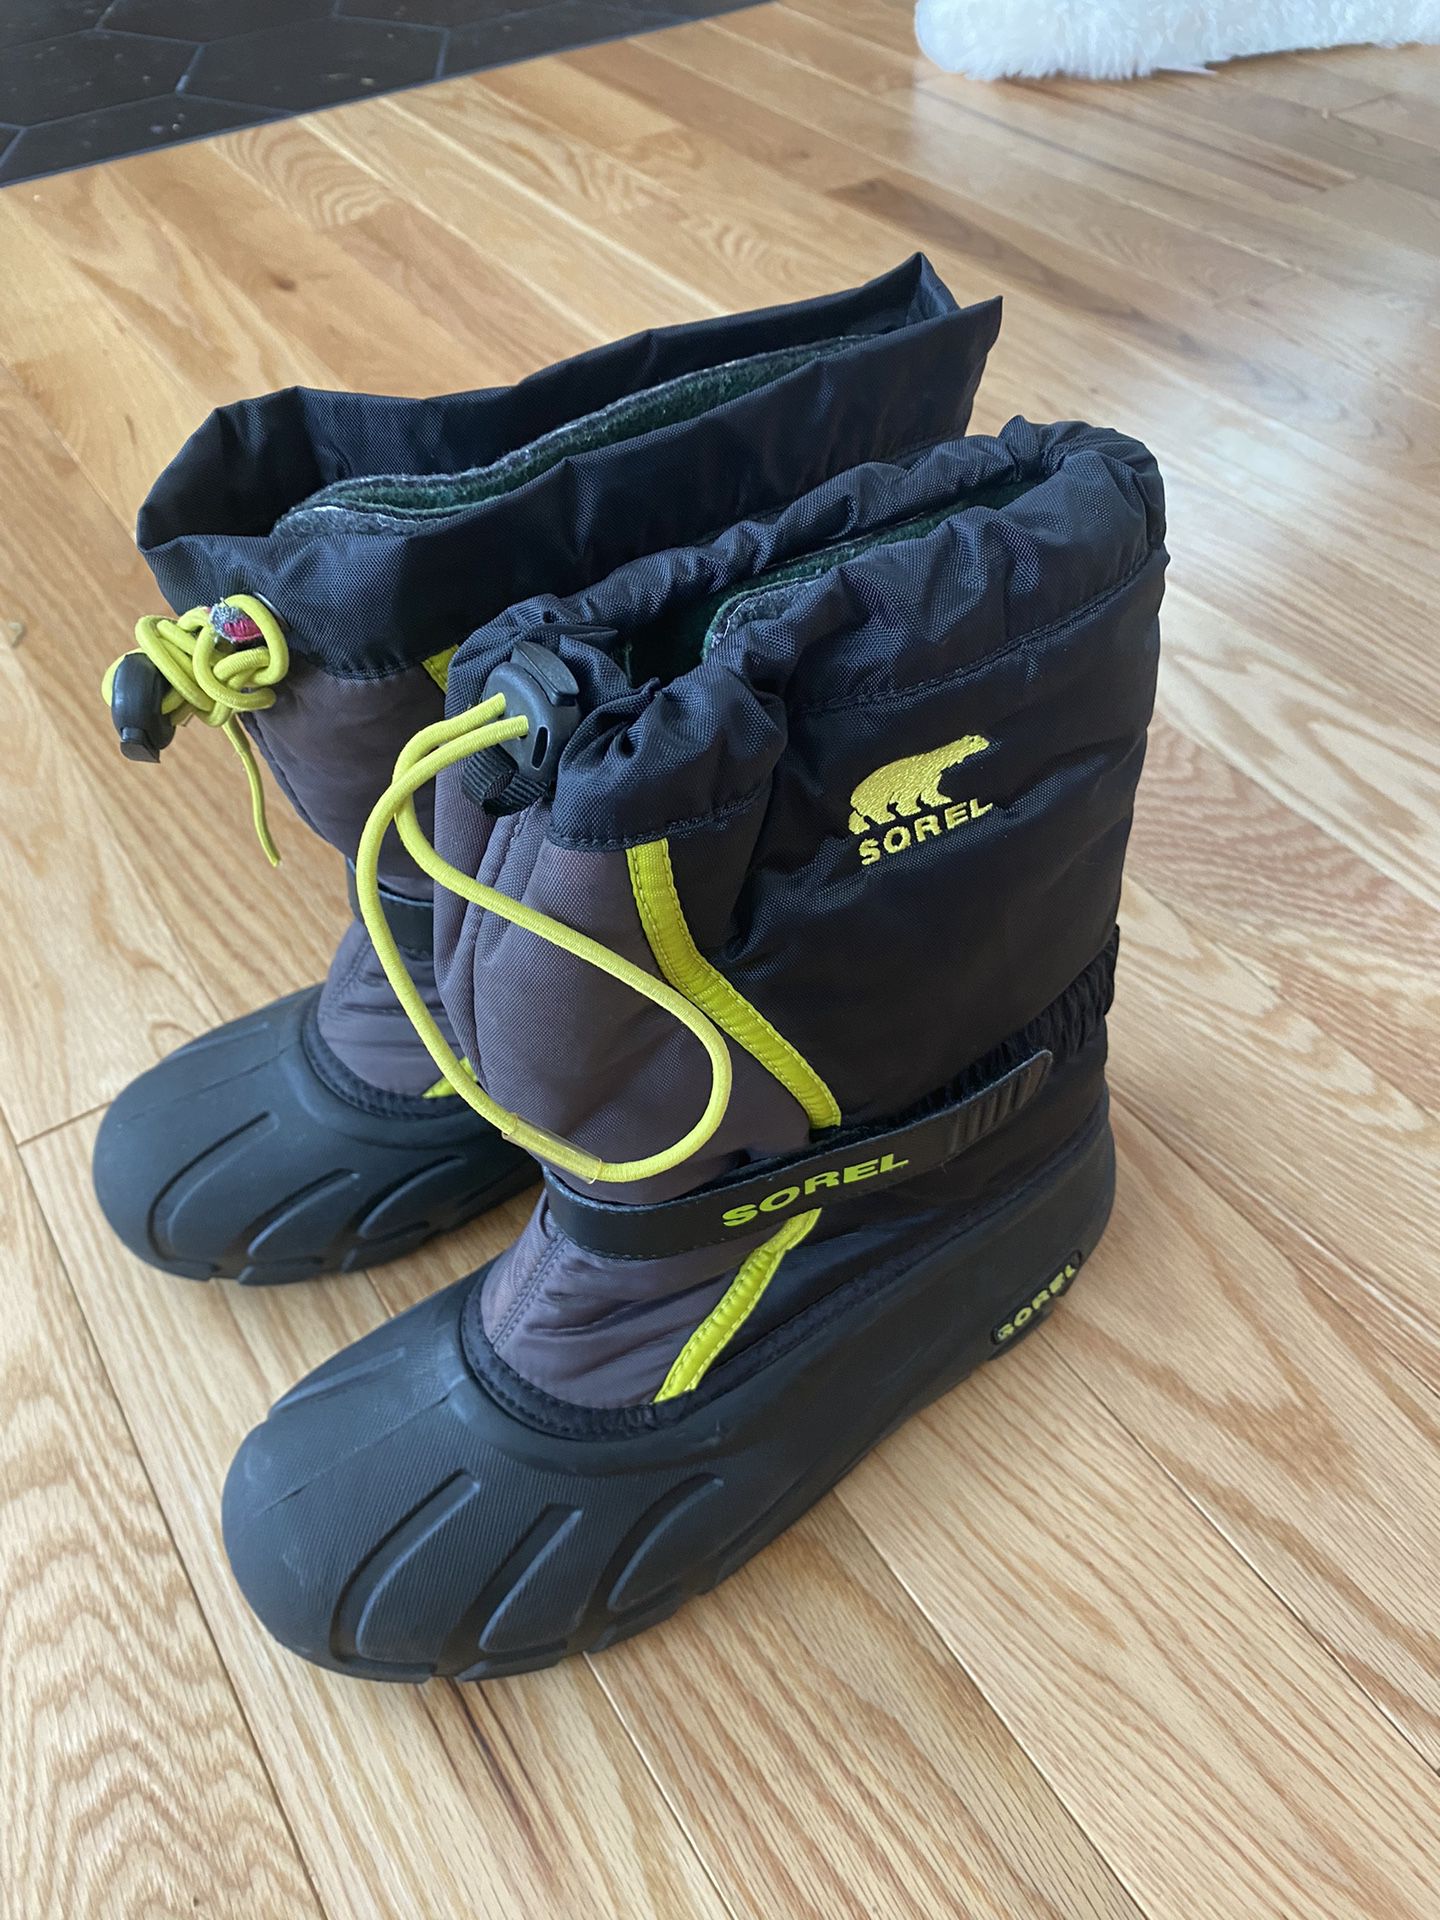 Sorel Size 6 Snow Boot